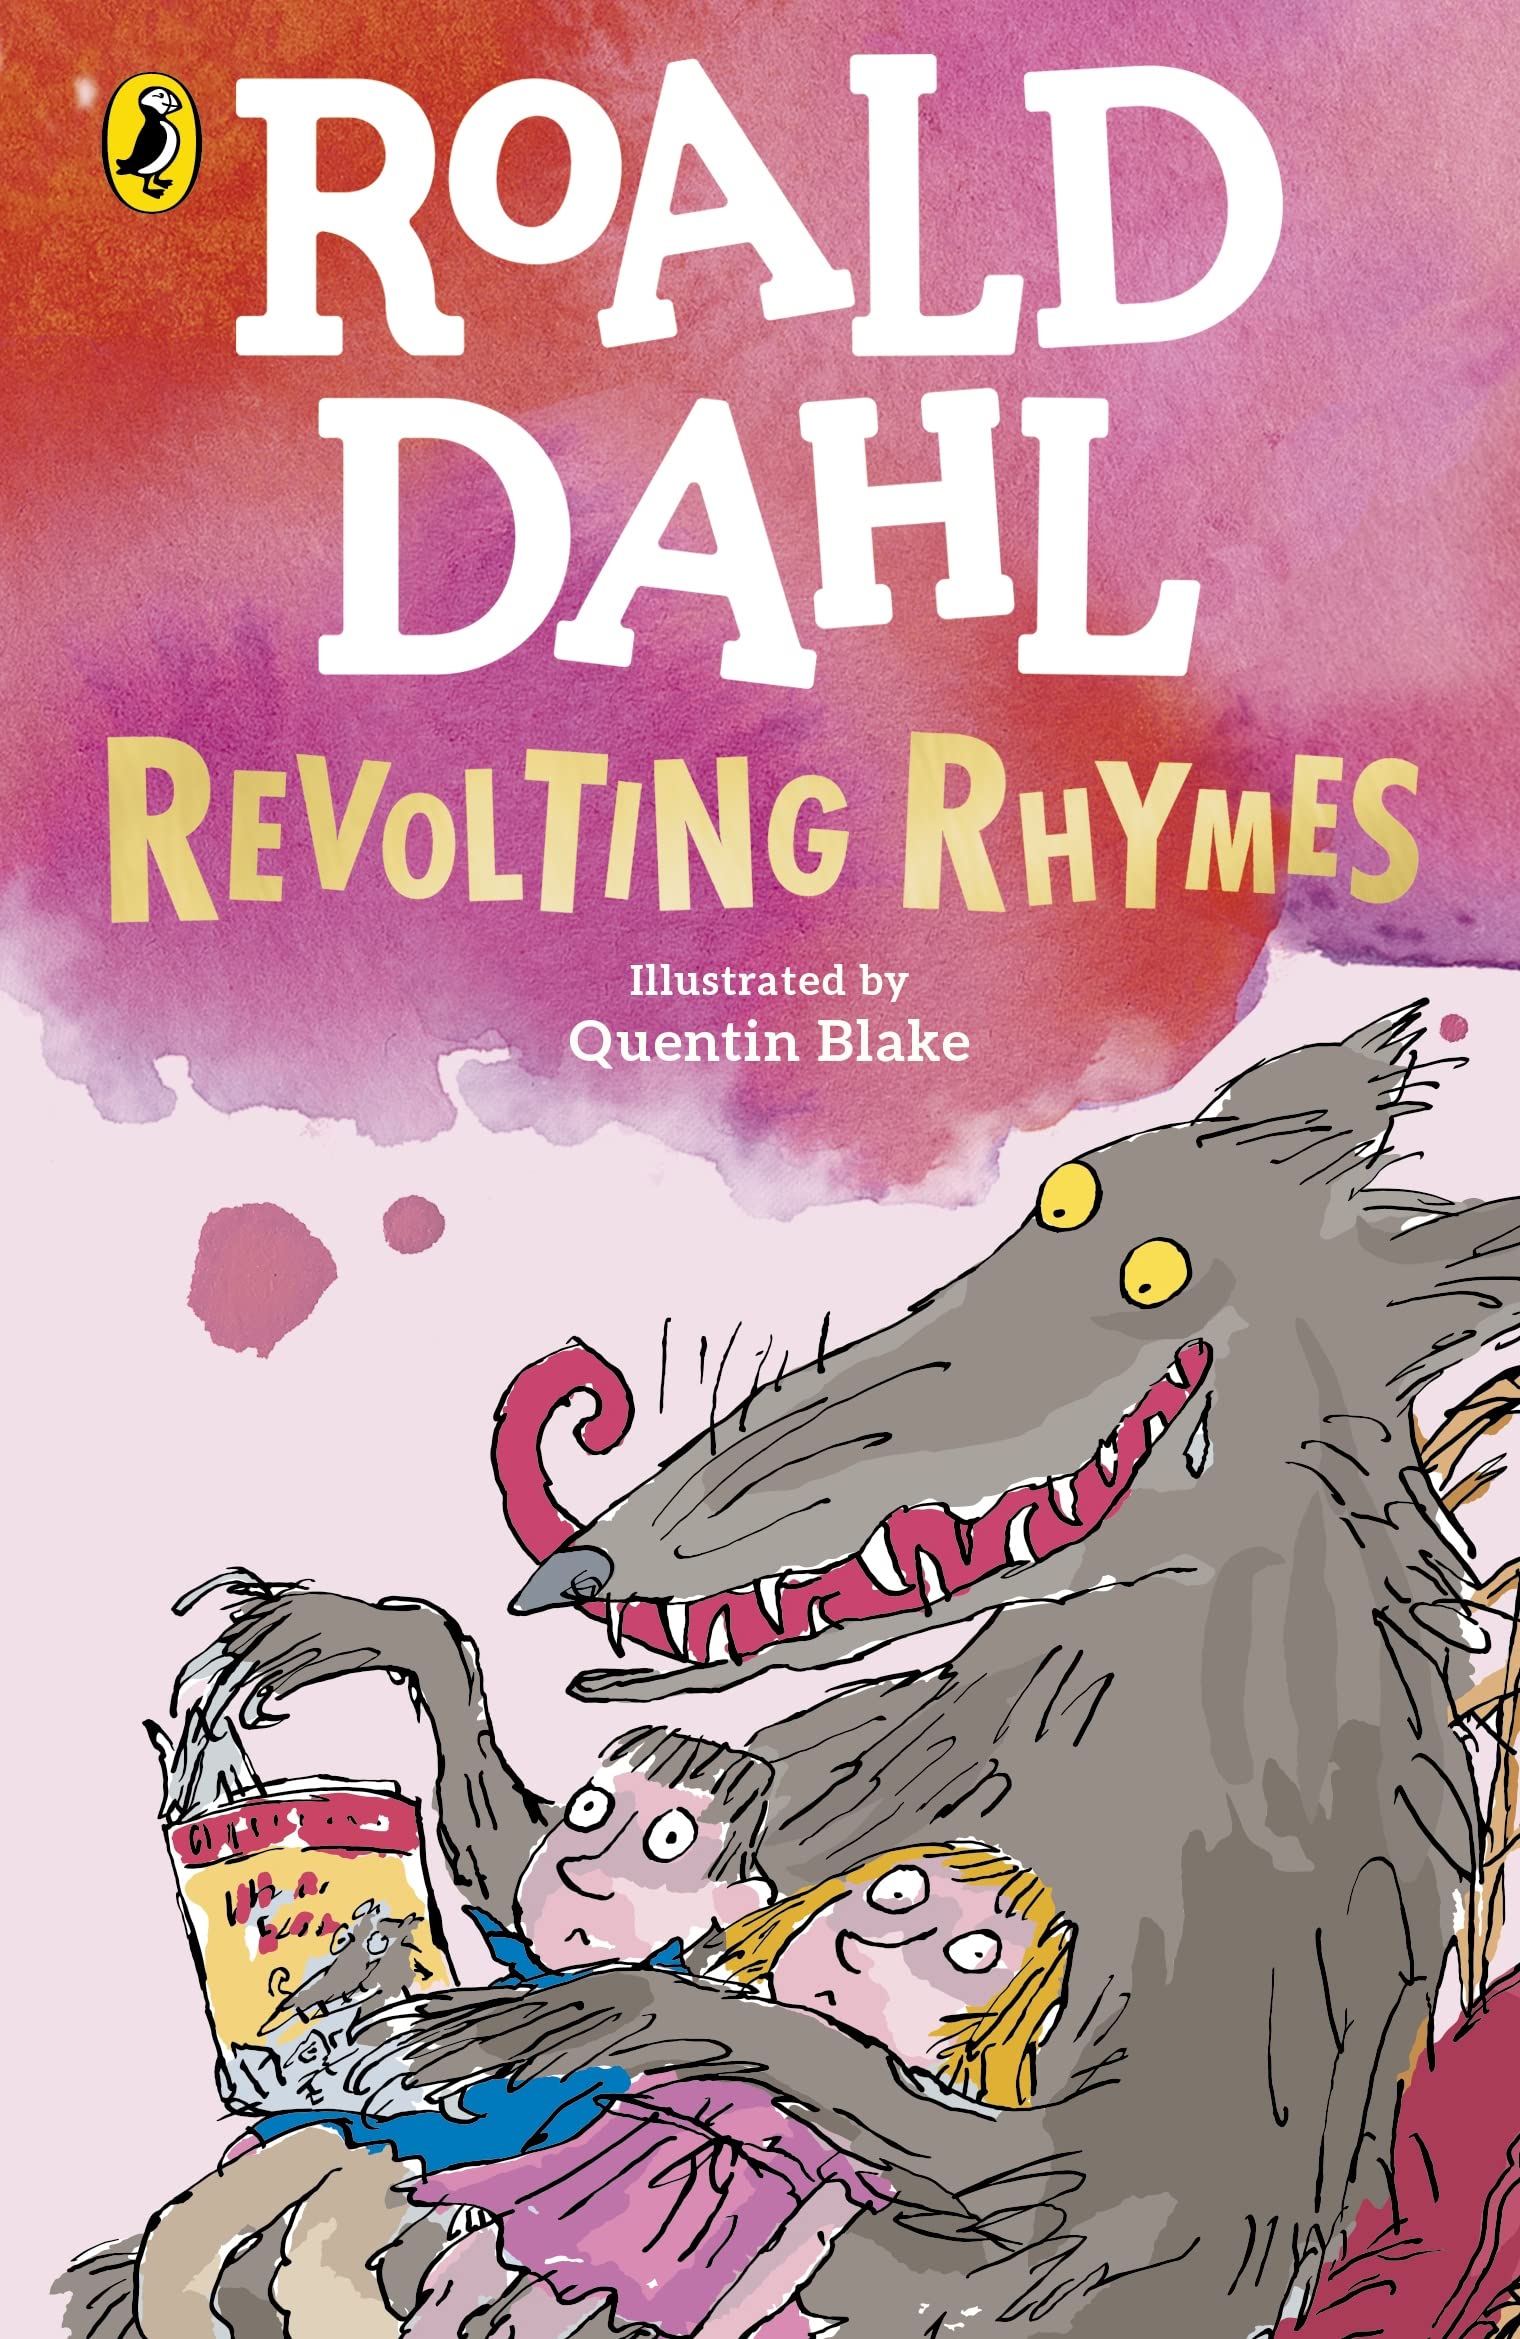 Revolting Rhymes | Roald Dahl